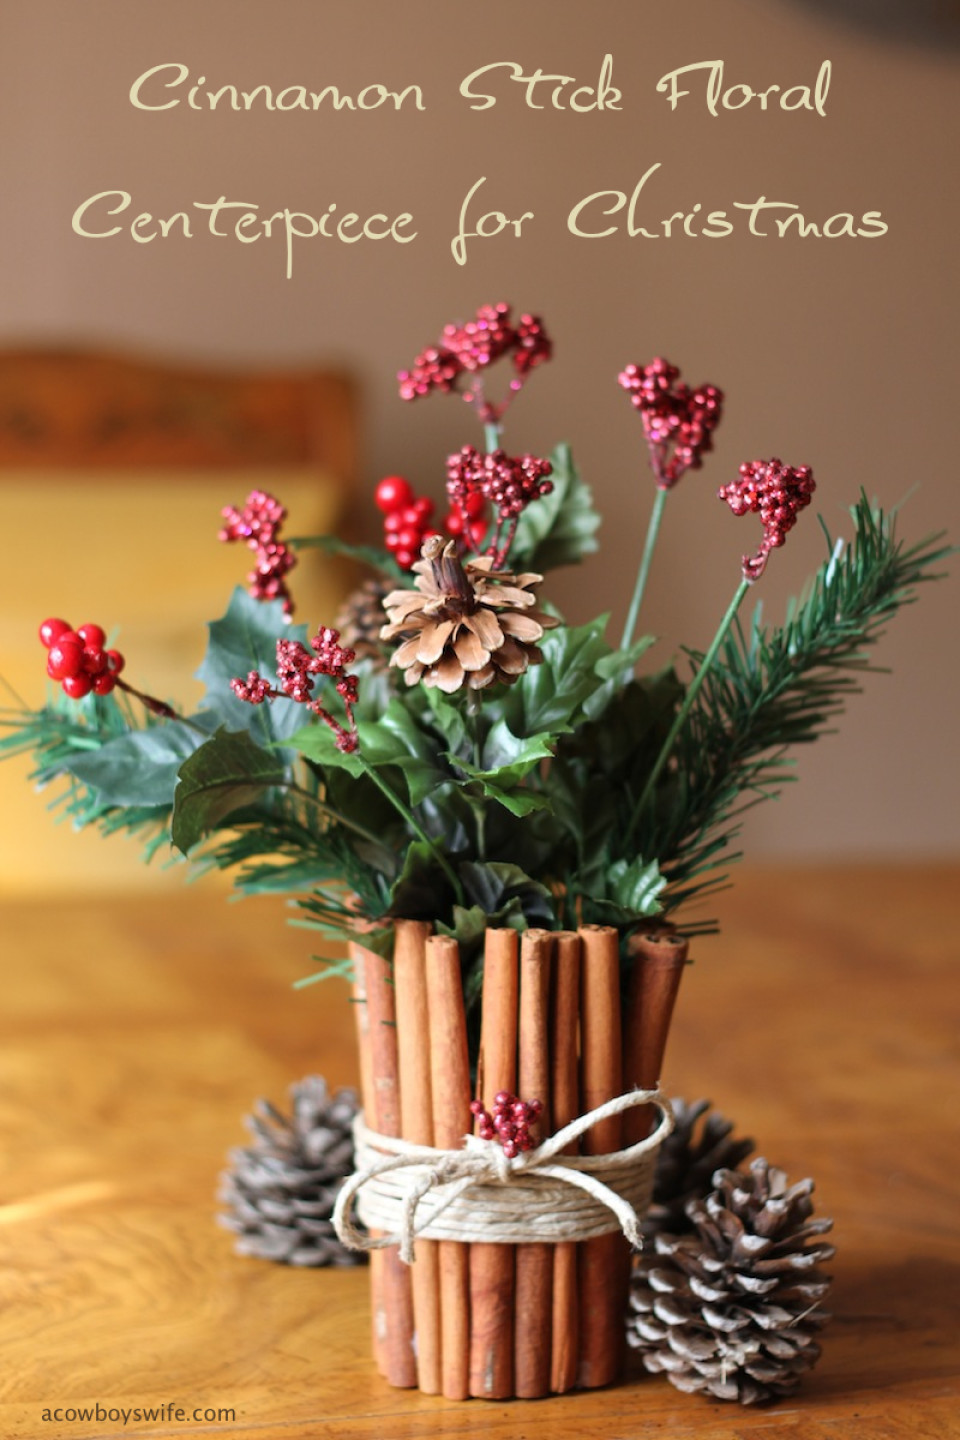 https://diybytiffany.com/wp-content/uploads/2013/12/Cinnamon-Stick-Floral-Centerpiece-for-Christmas-960x1440_c.jpg